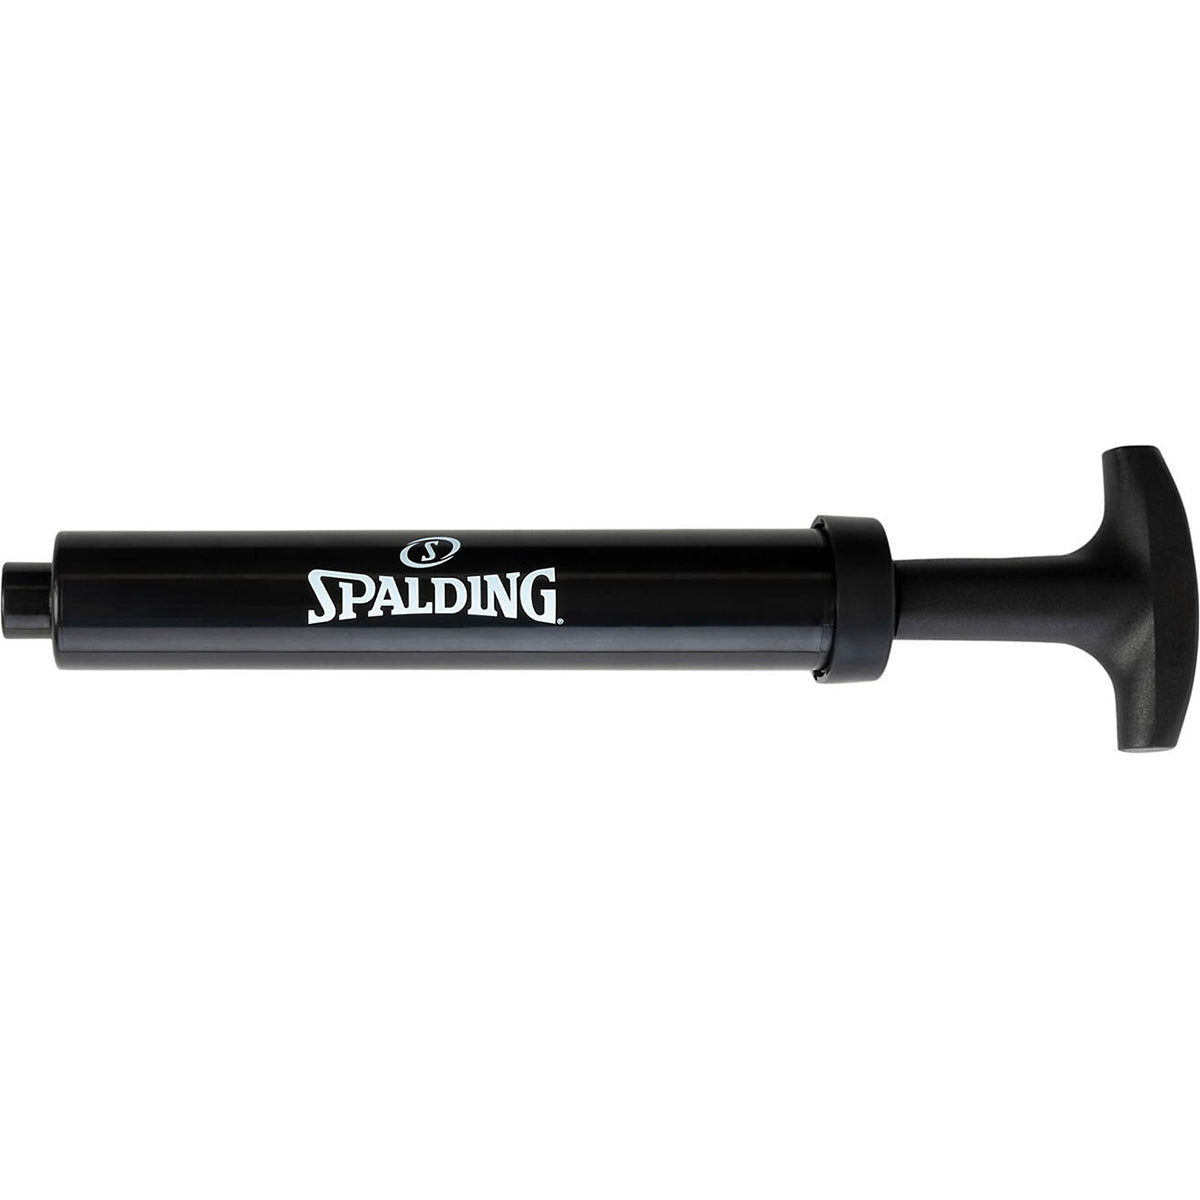 Spalding 6" Dual Action Ball Pump - Black Spalding